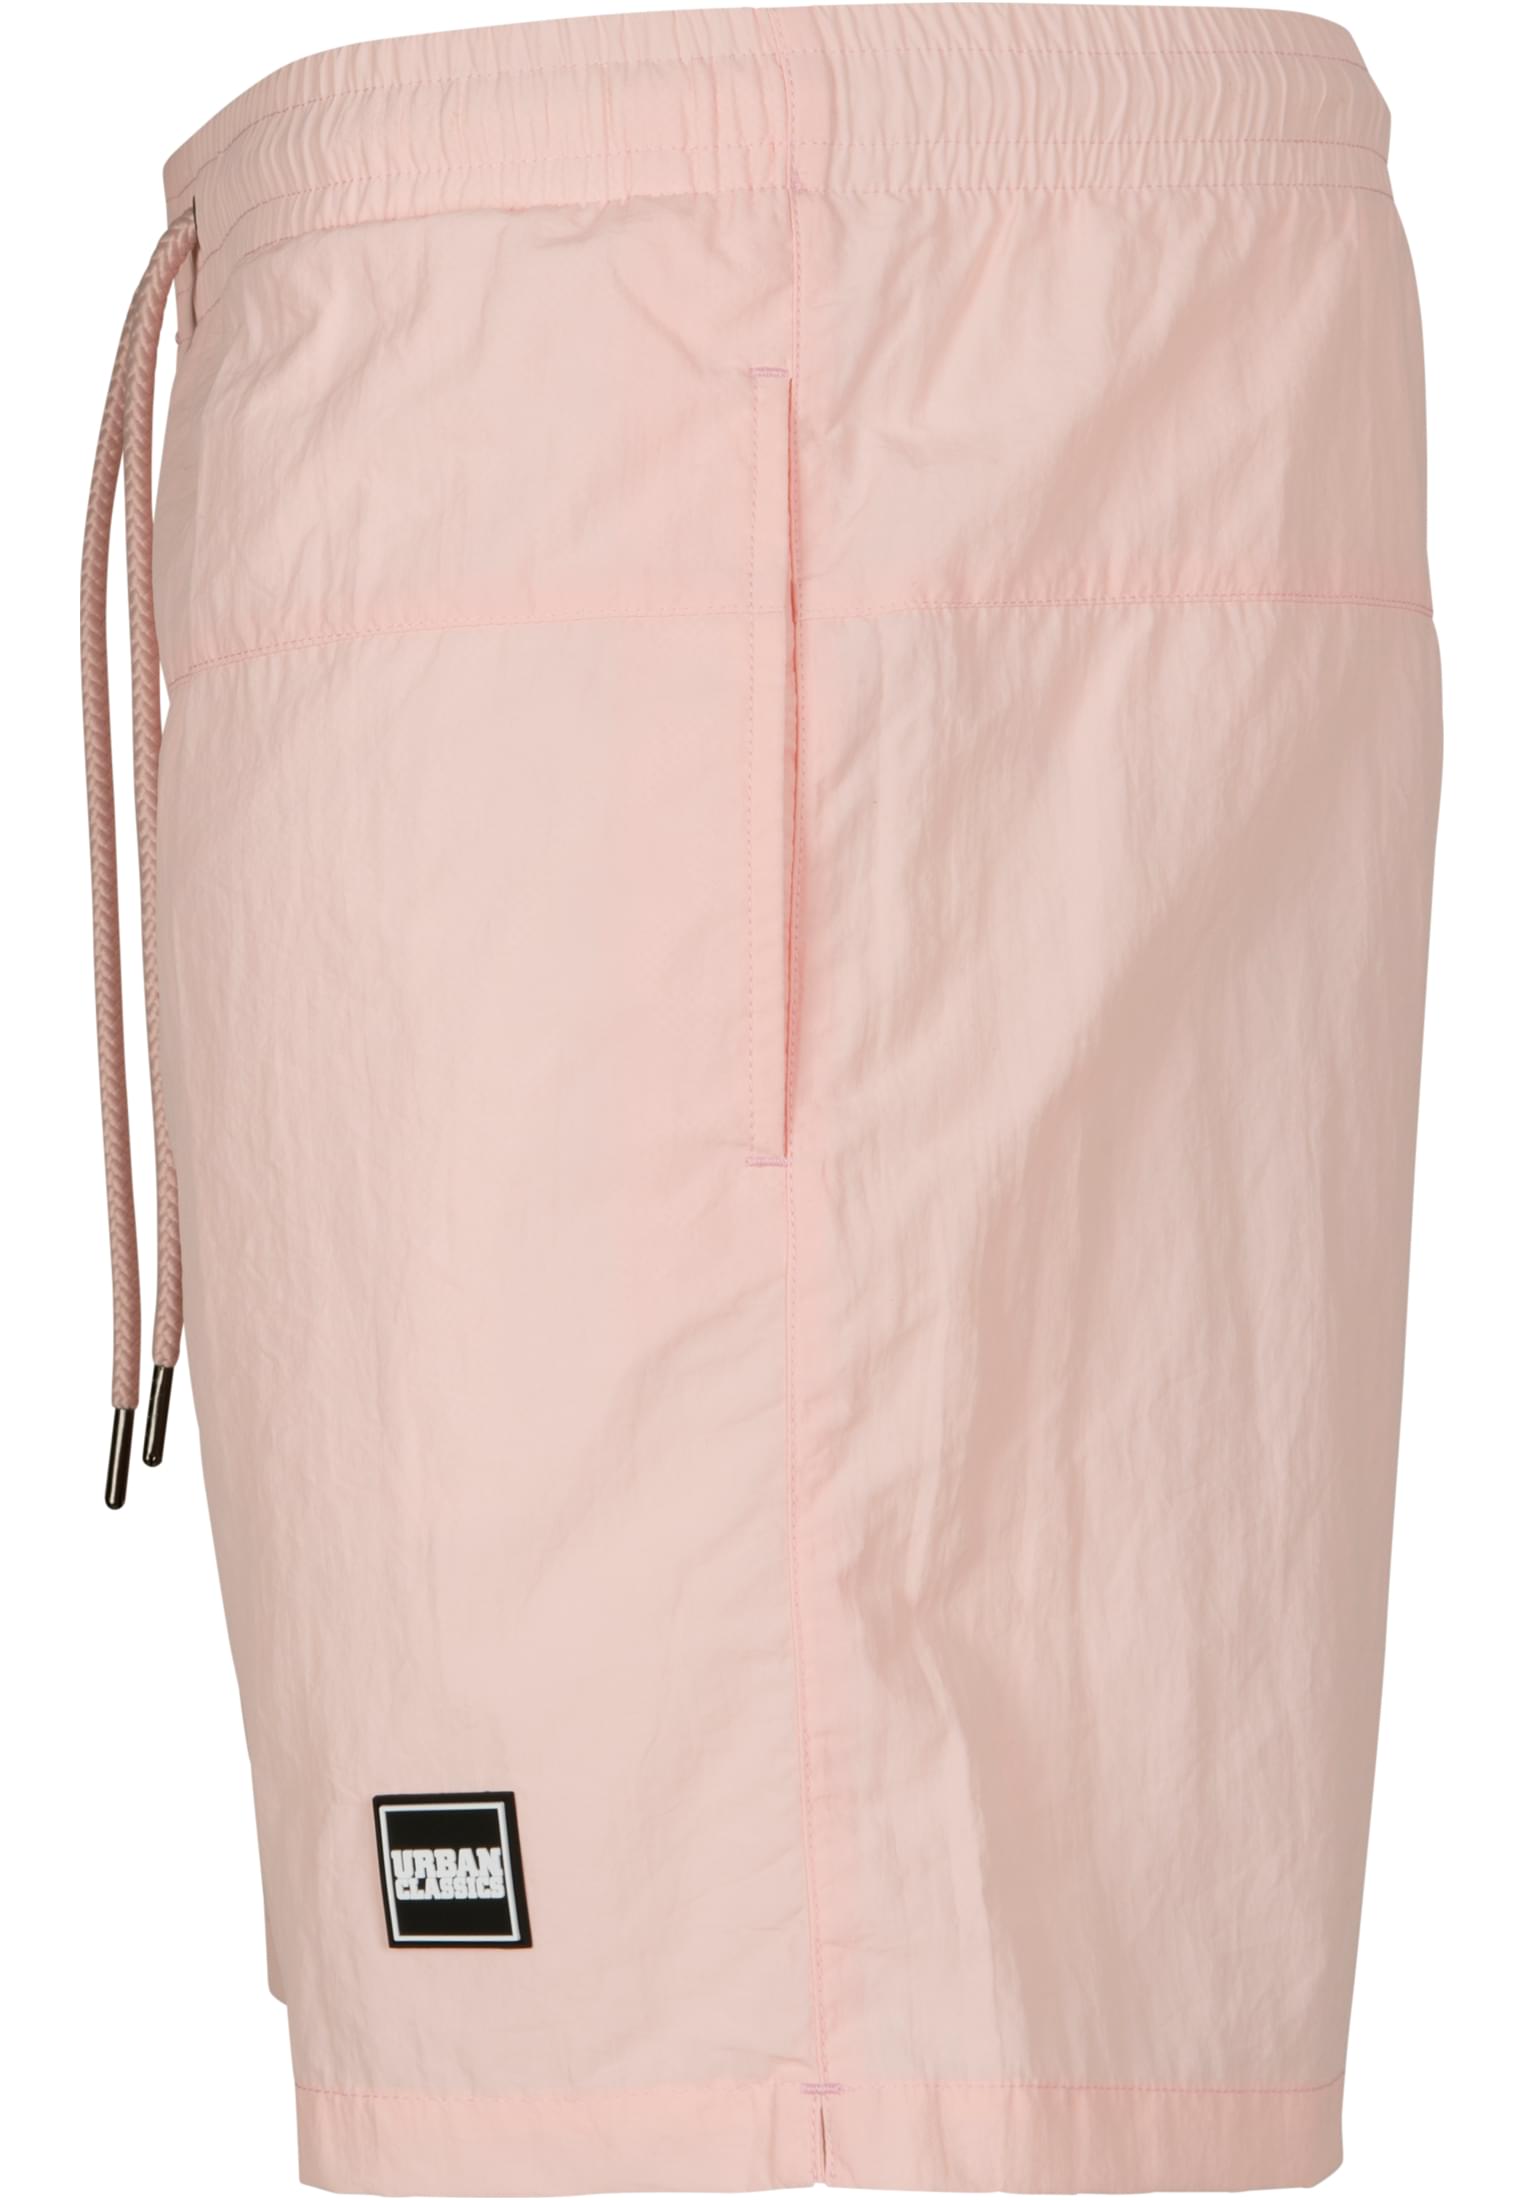 Plus Size Block Swim Shorts in Farbe pink